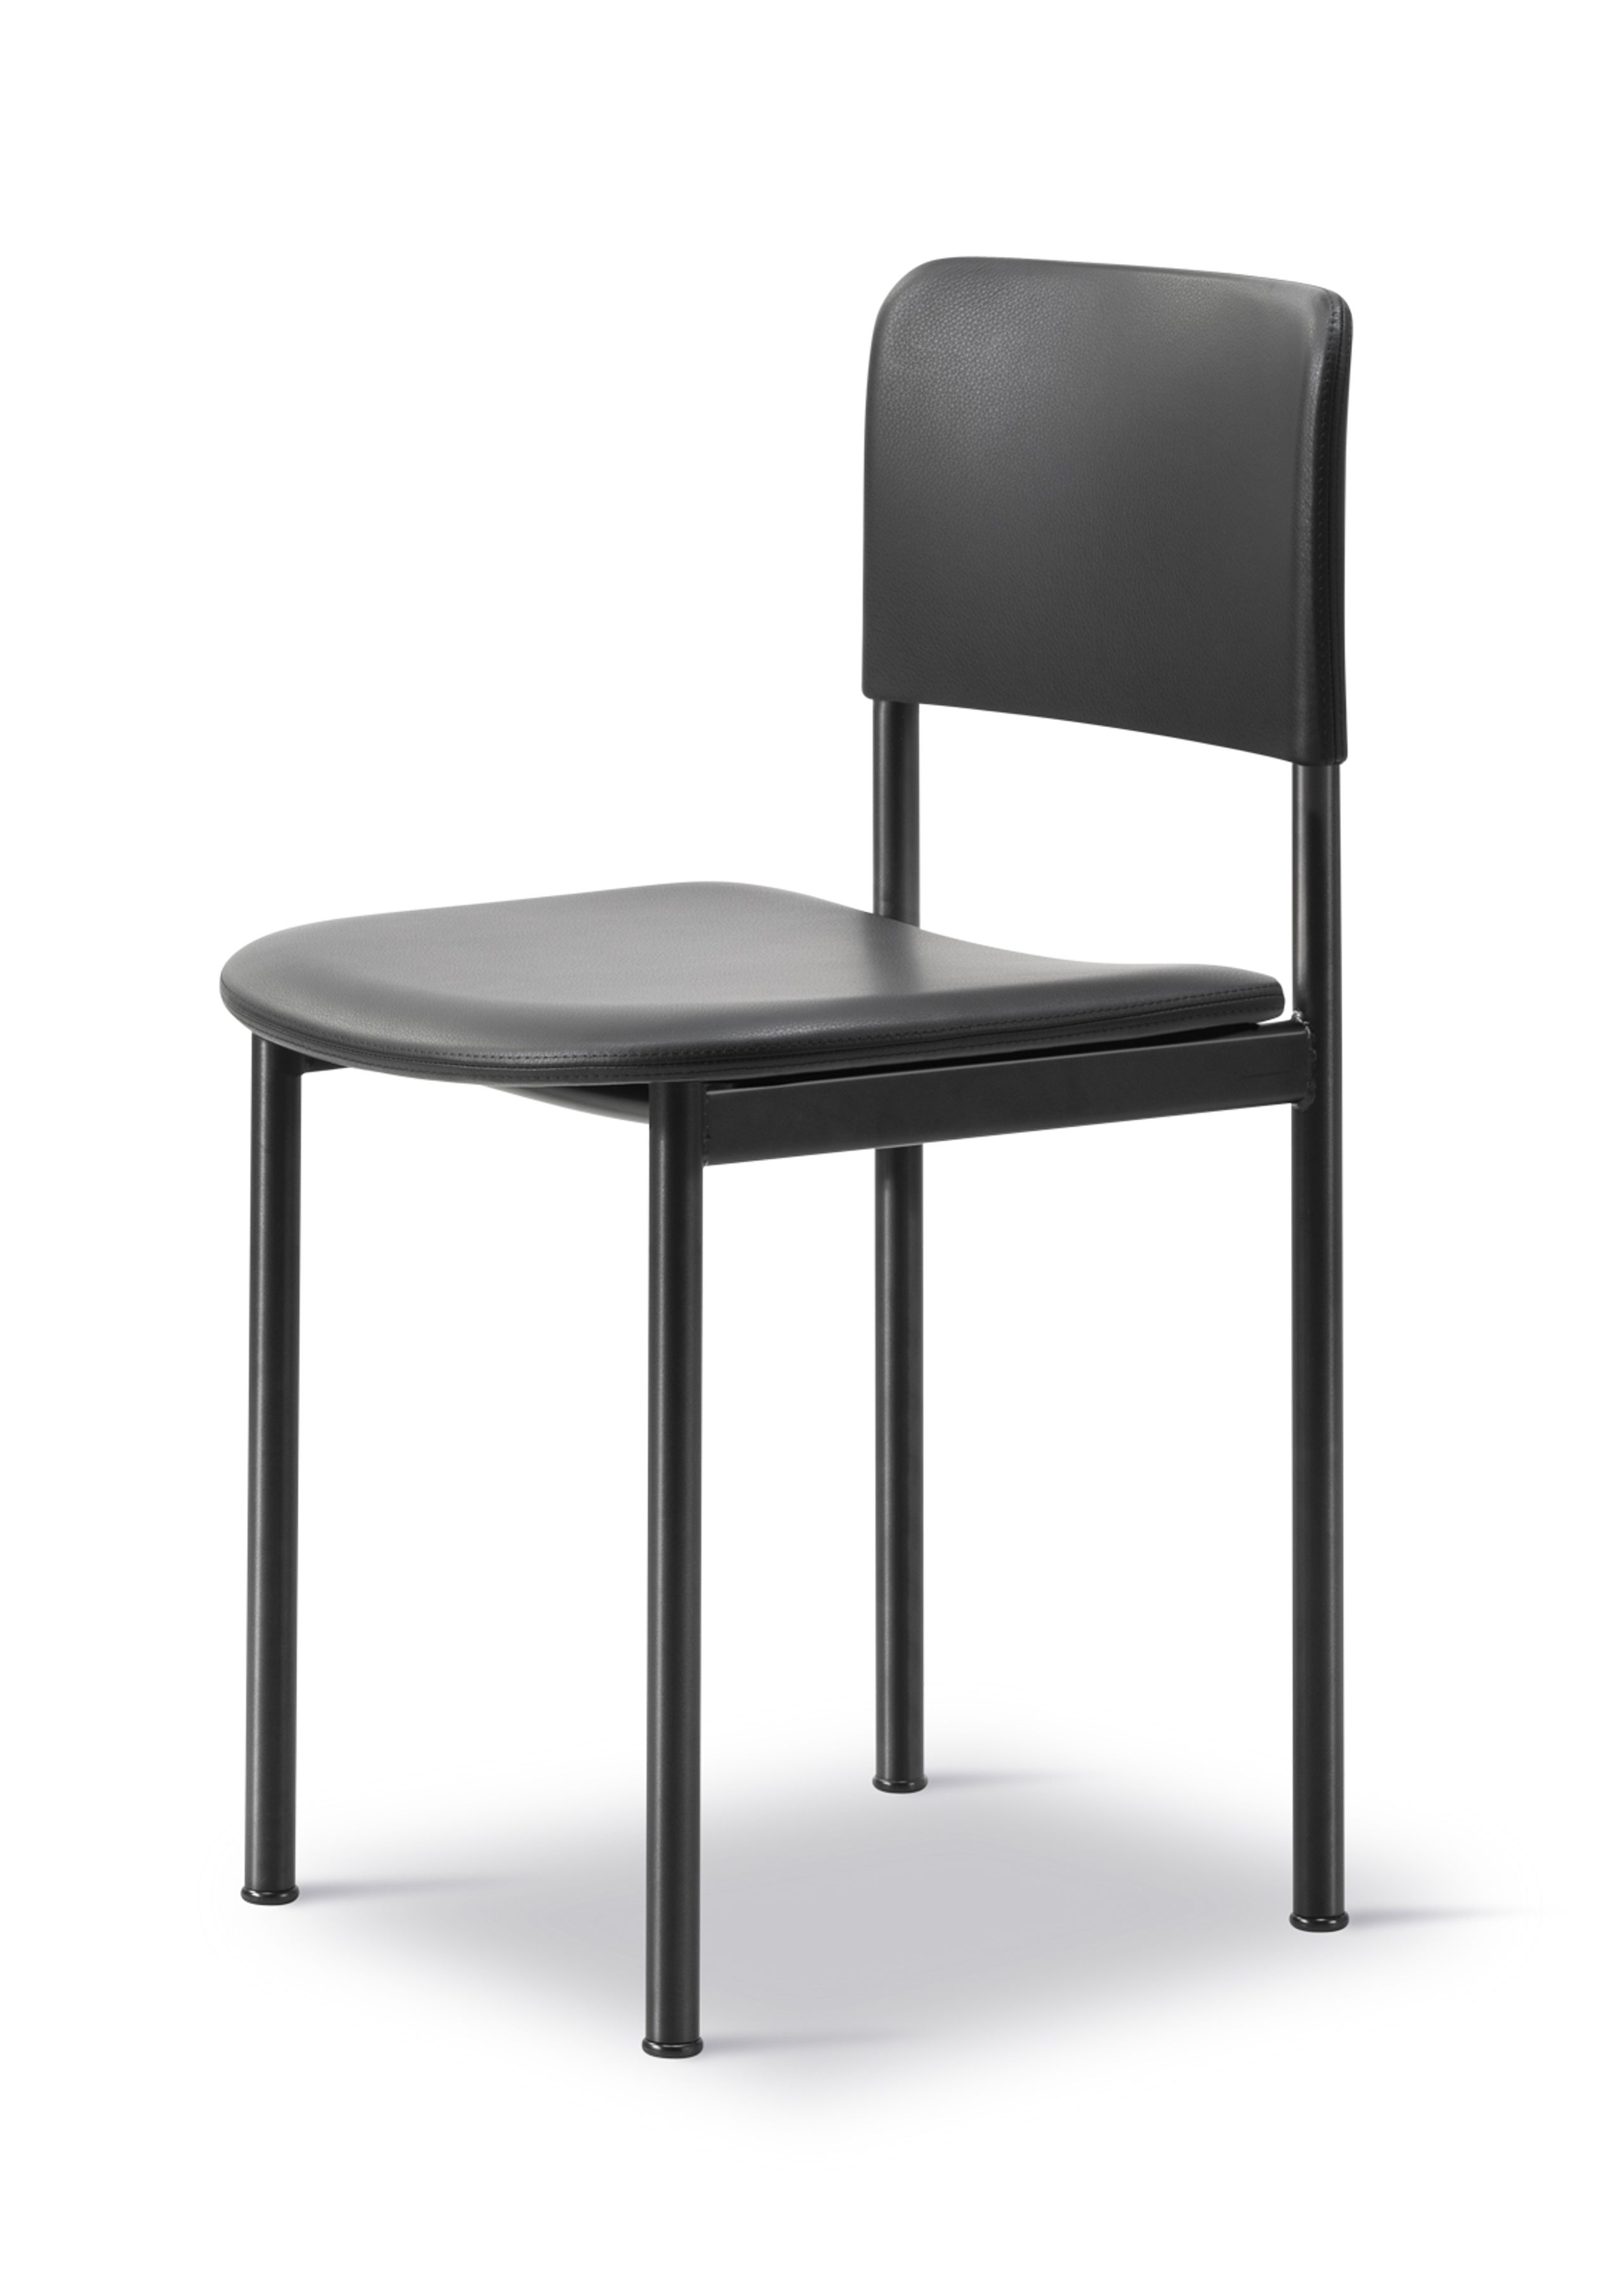 Fredericia Furniture - Spisebordsstol - Plan Chair 3414 by Edward Barber & Jay Osgerby - Omni 301 Black / Black